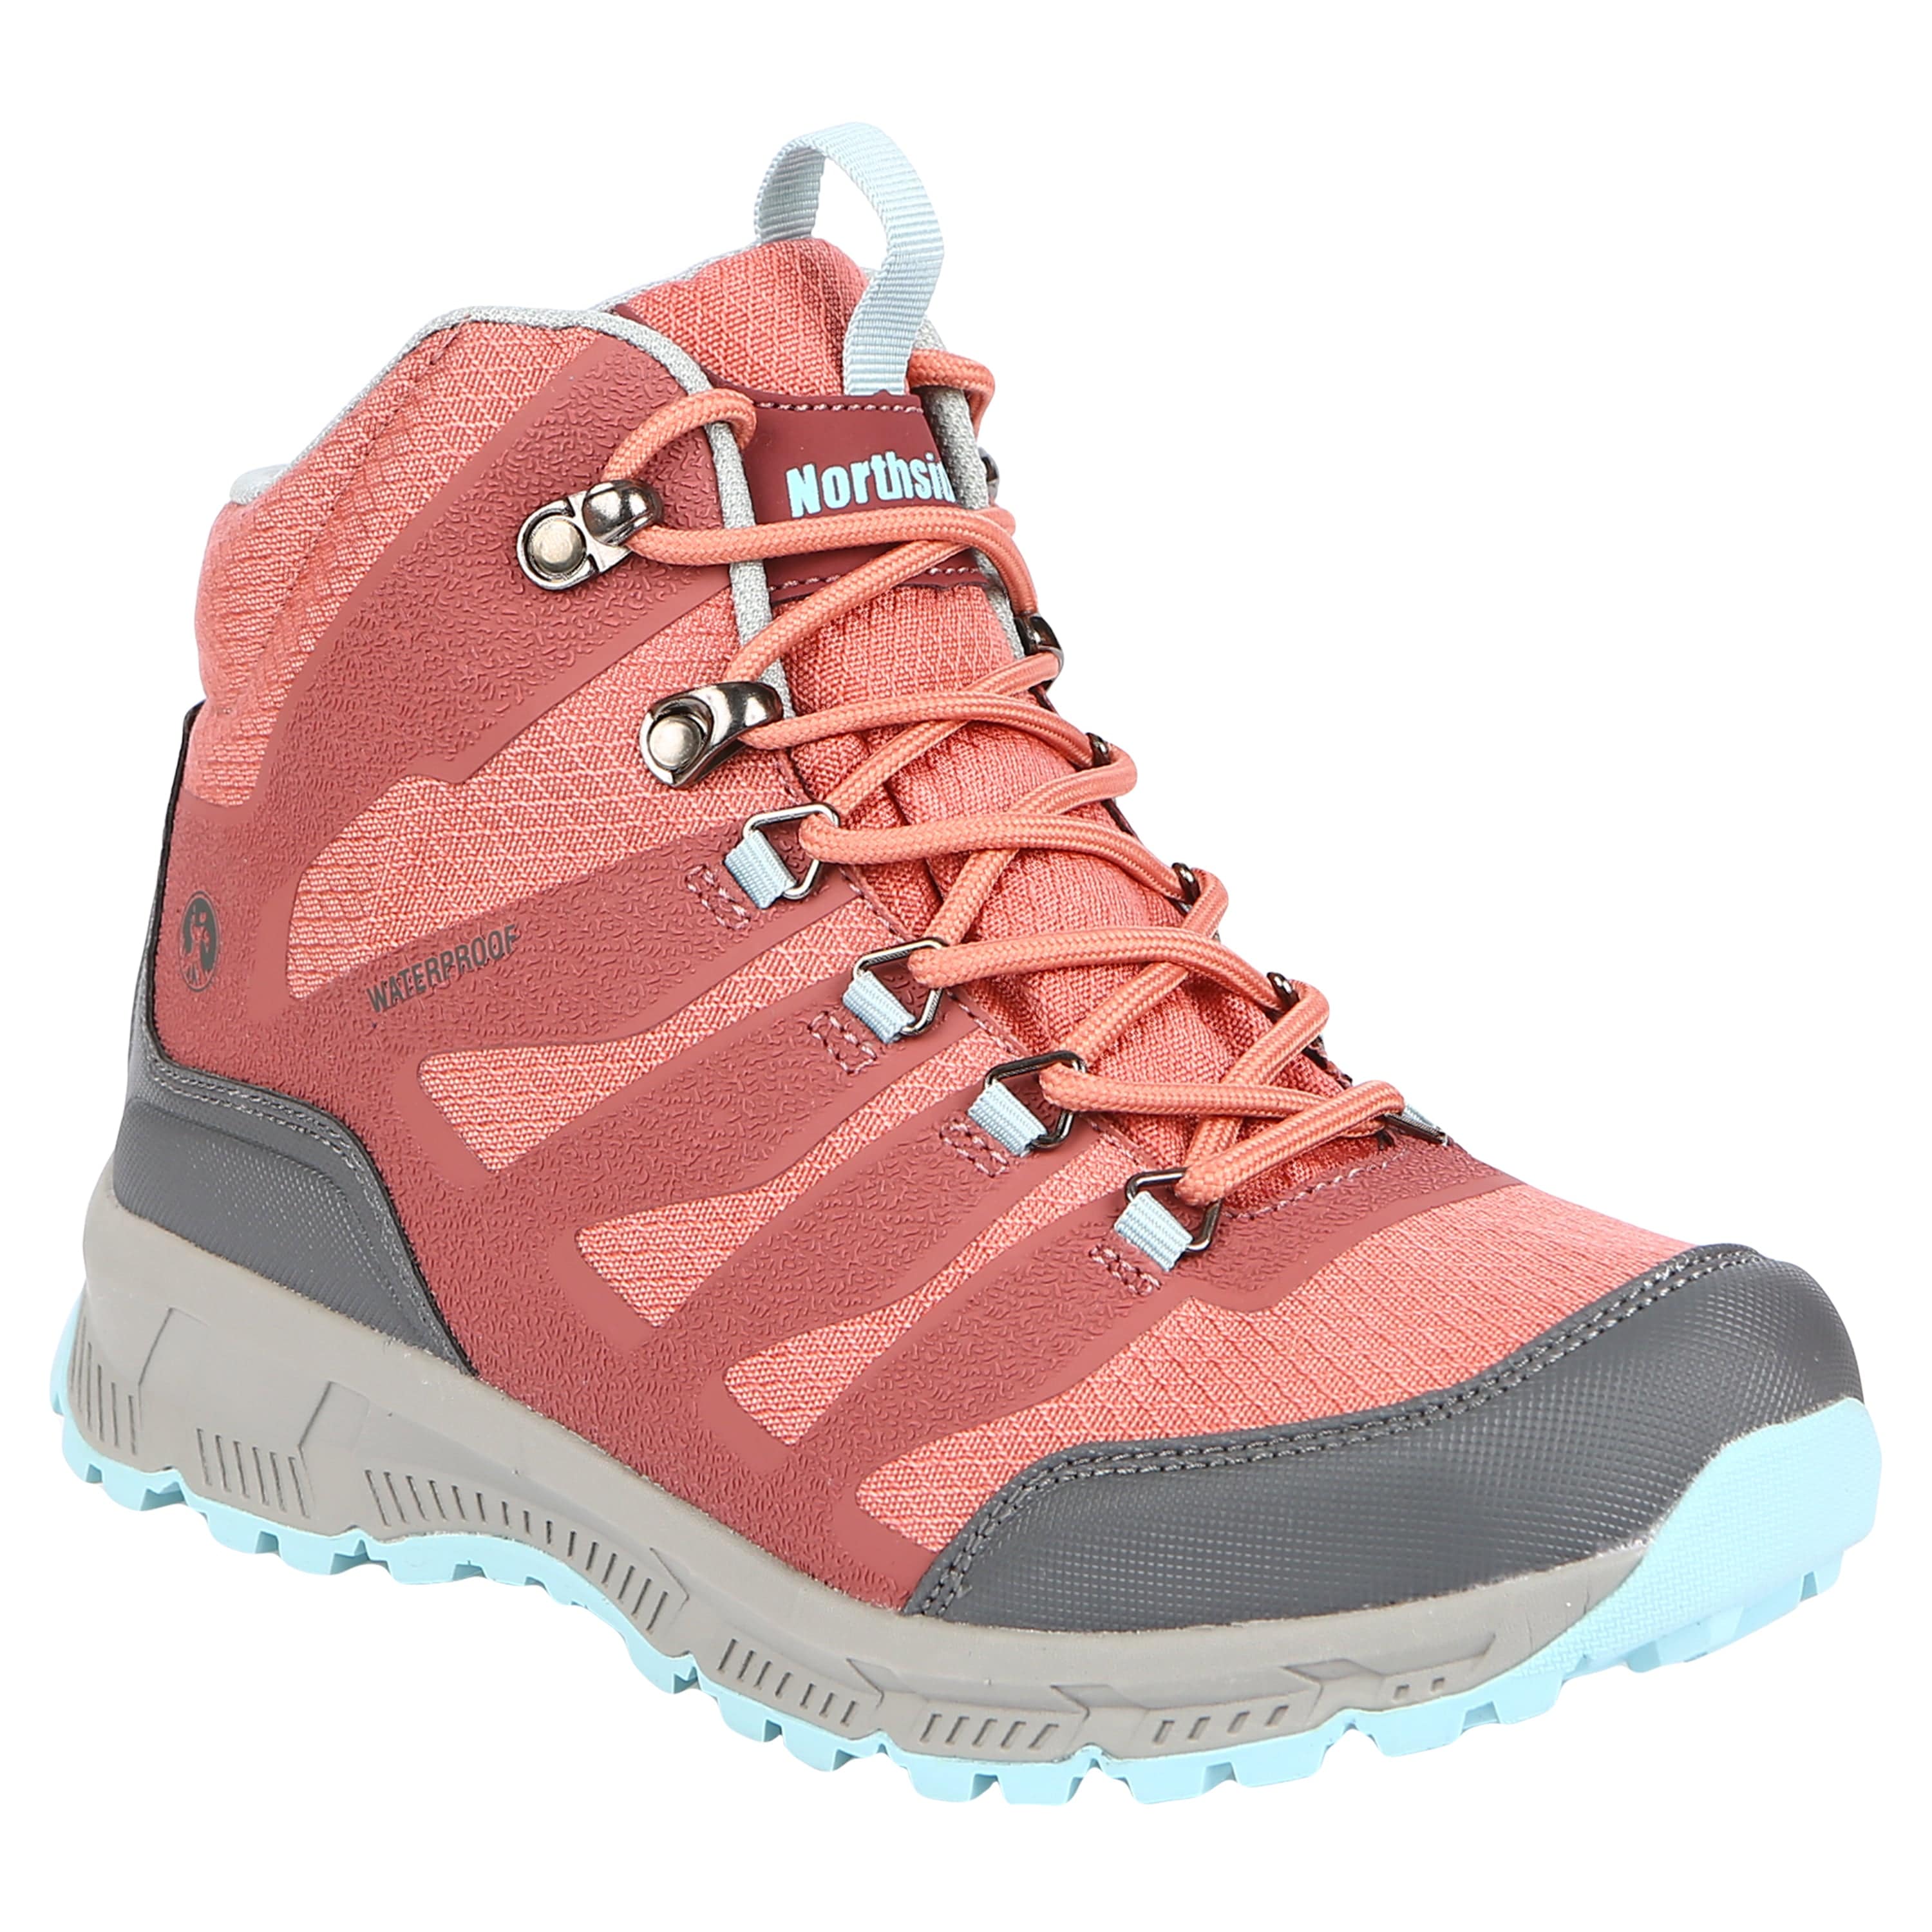 Women's Hargrove Mid Waterproof Hiking Boot - Northside USA